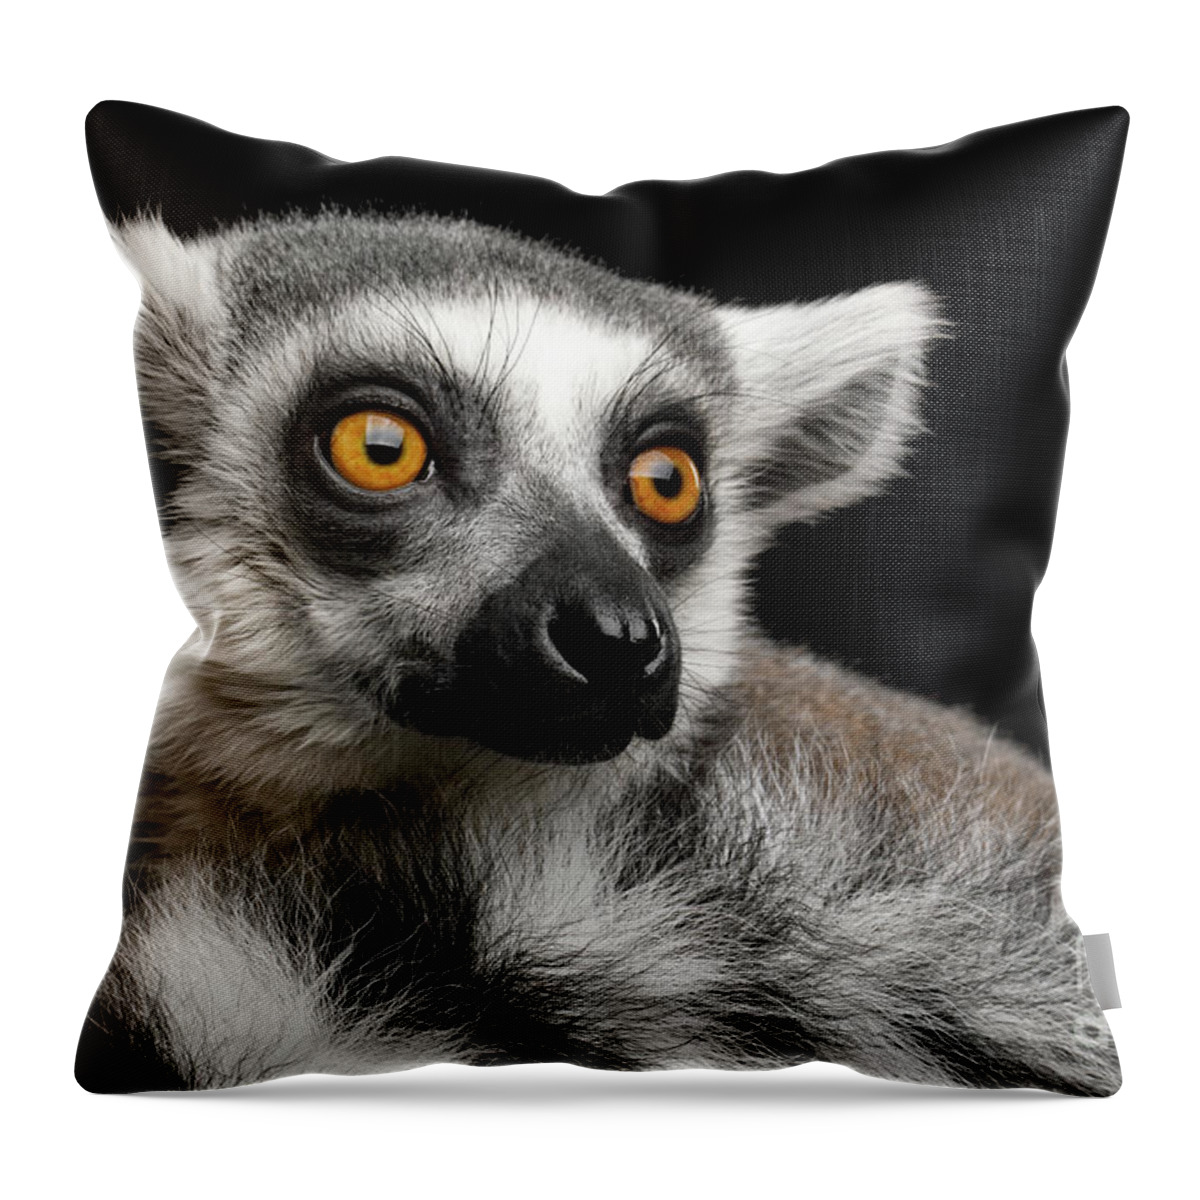 Lemur Throw Pillow featuring the photograph Lemur by Sergey Taran